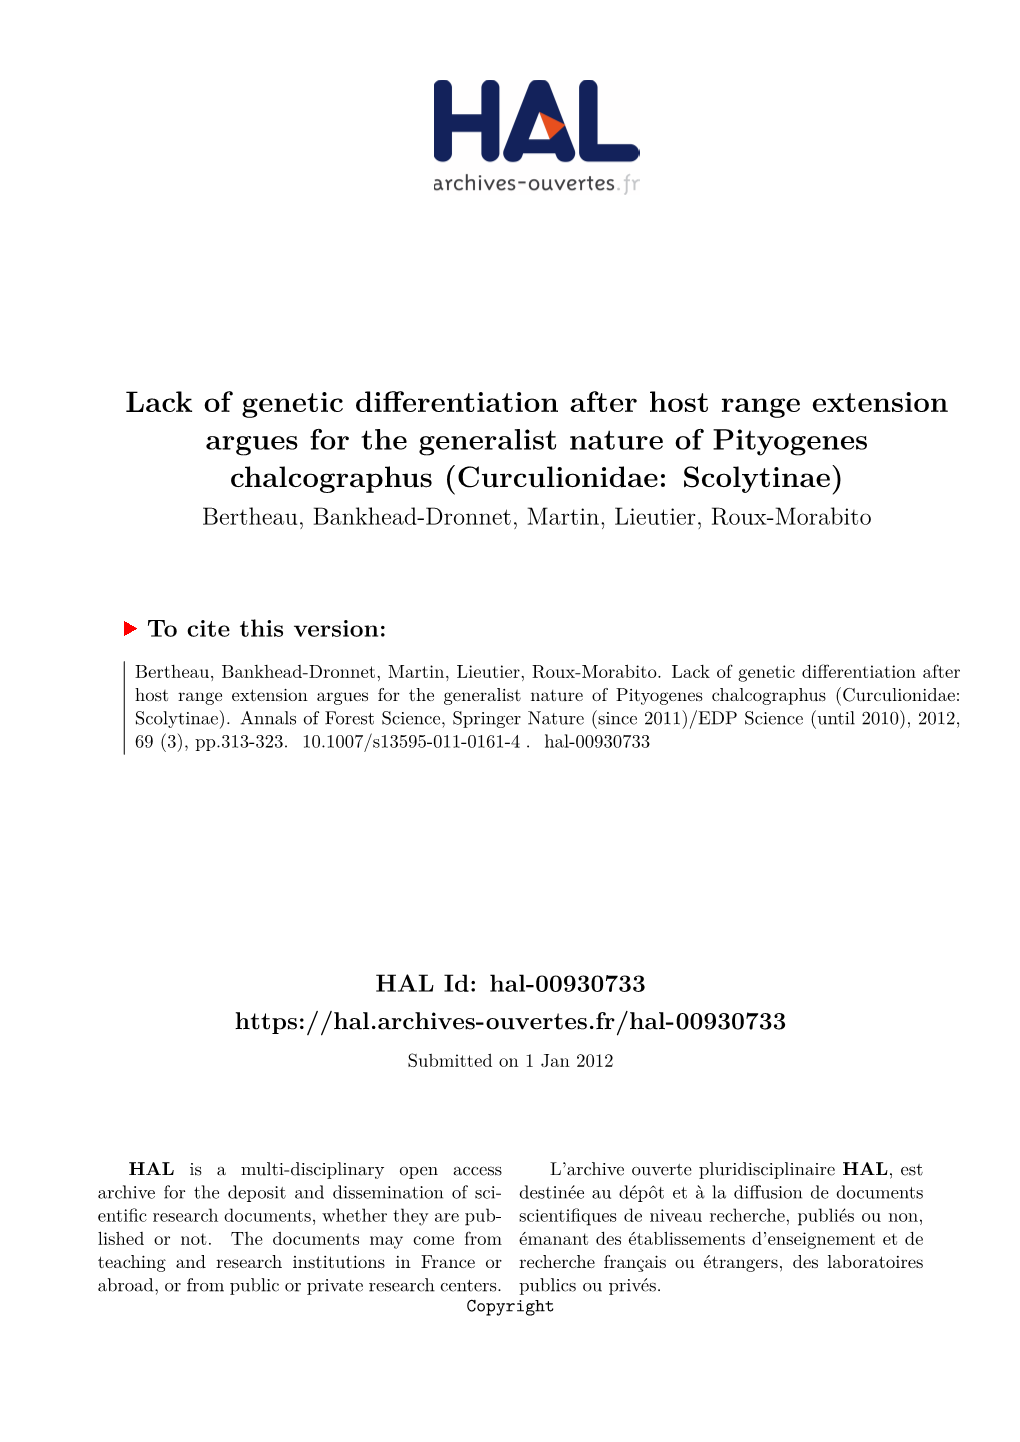 Lack of Genetic Differentiation After Host Range